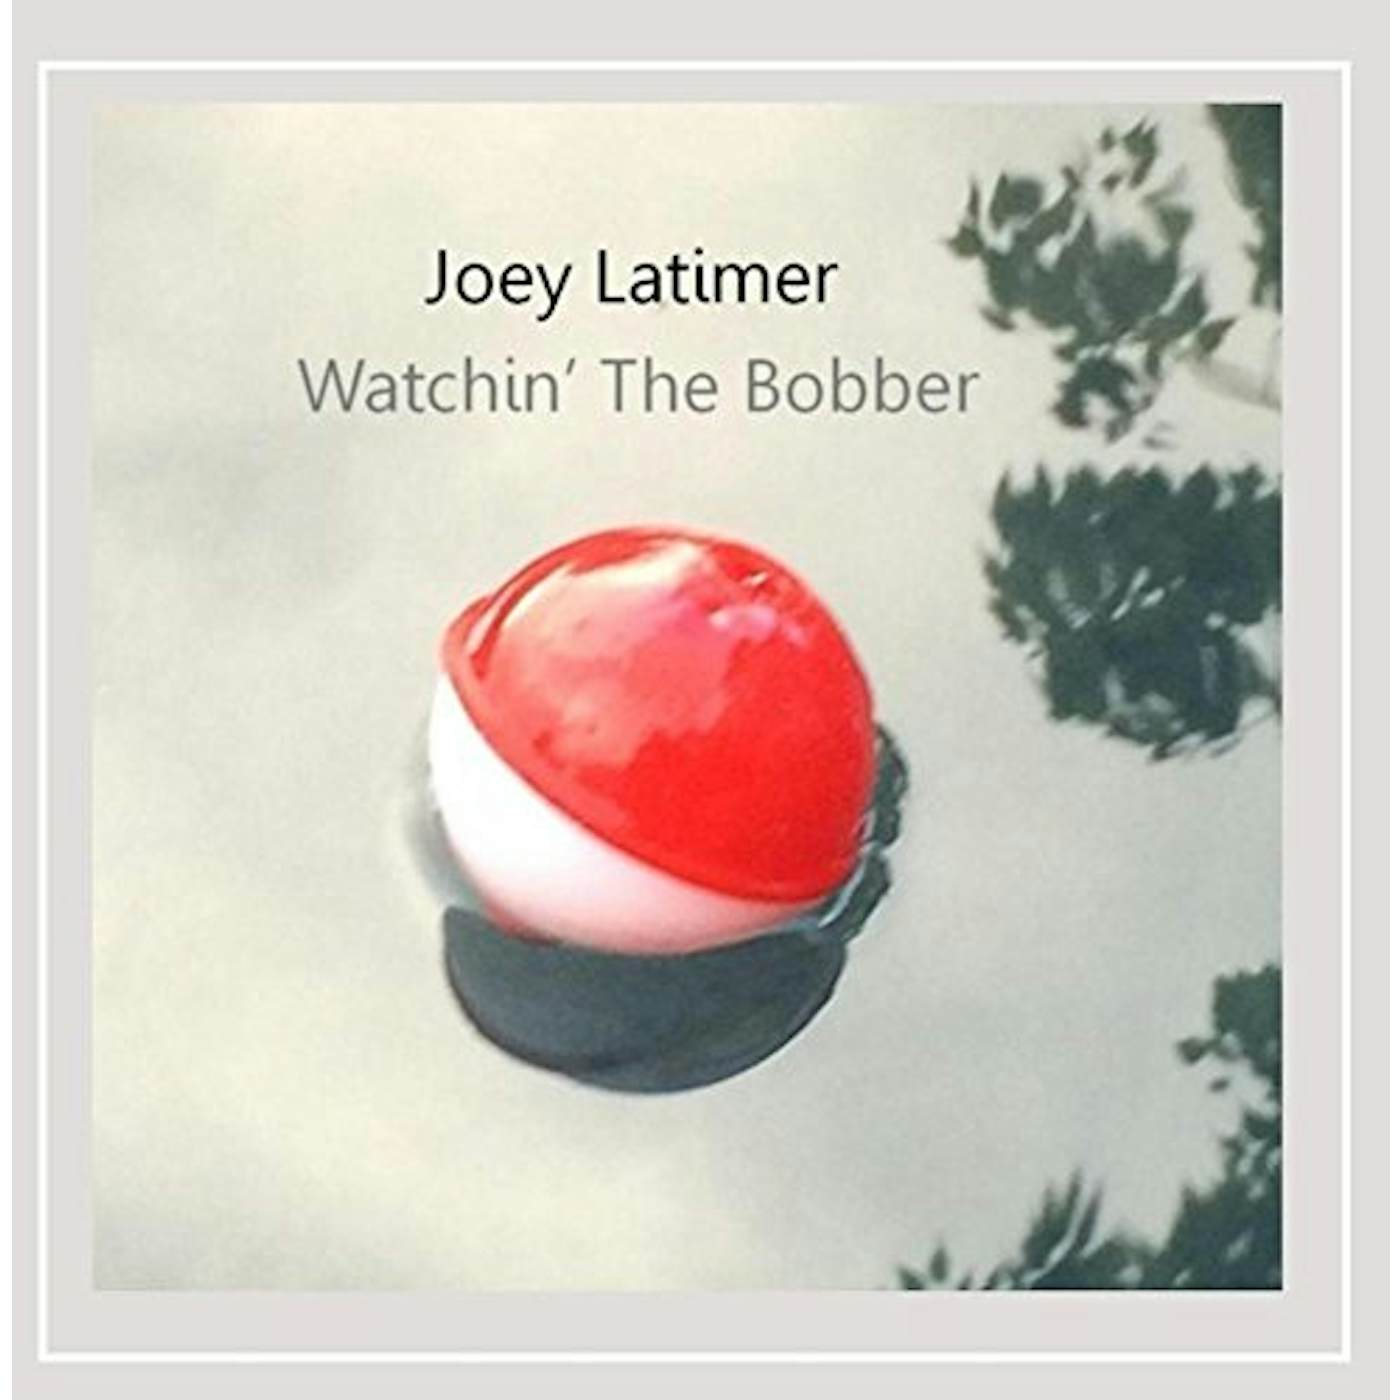 Joey Latimer WATCHIN' THE BOBBER CD